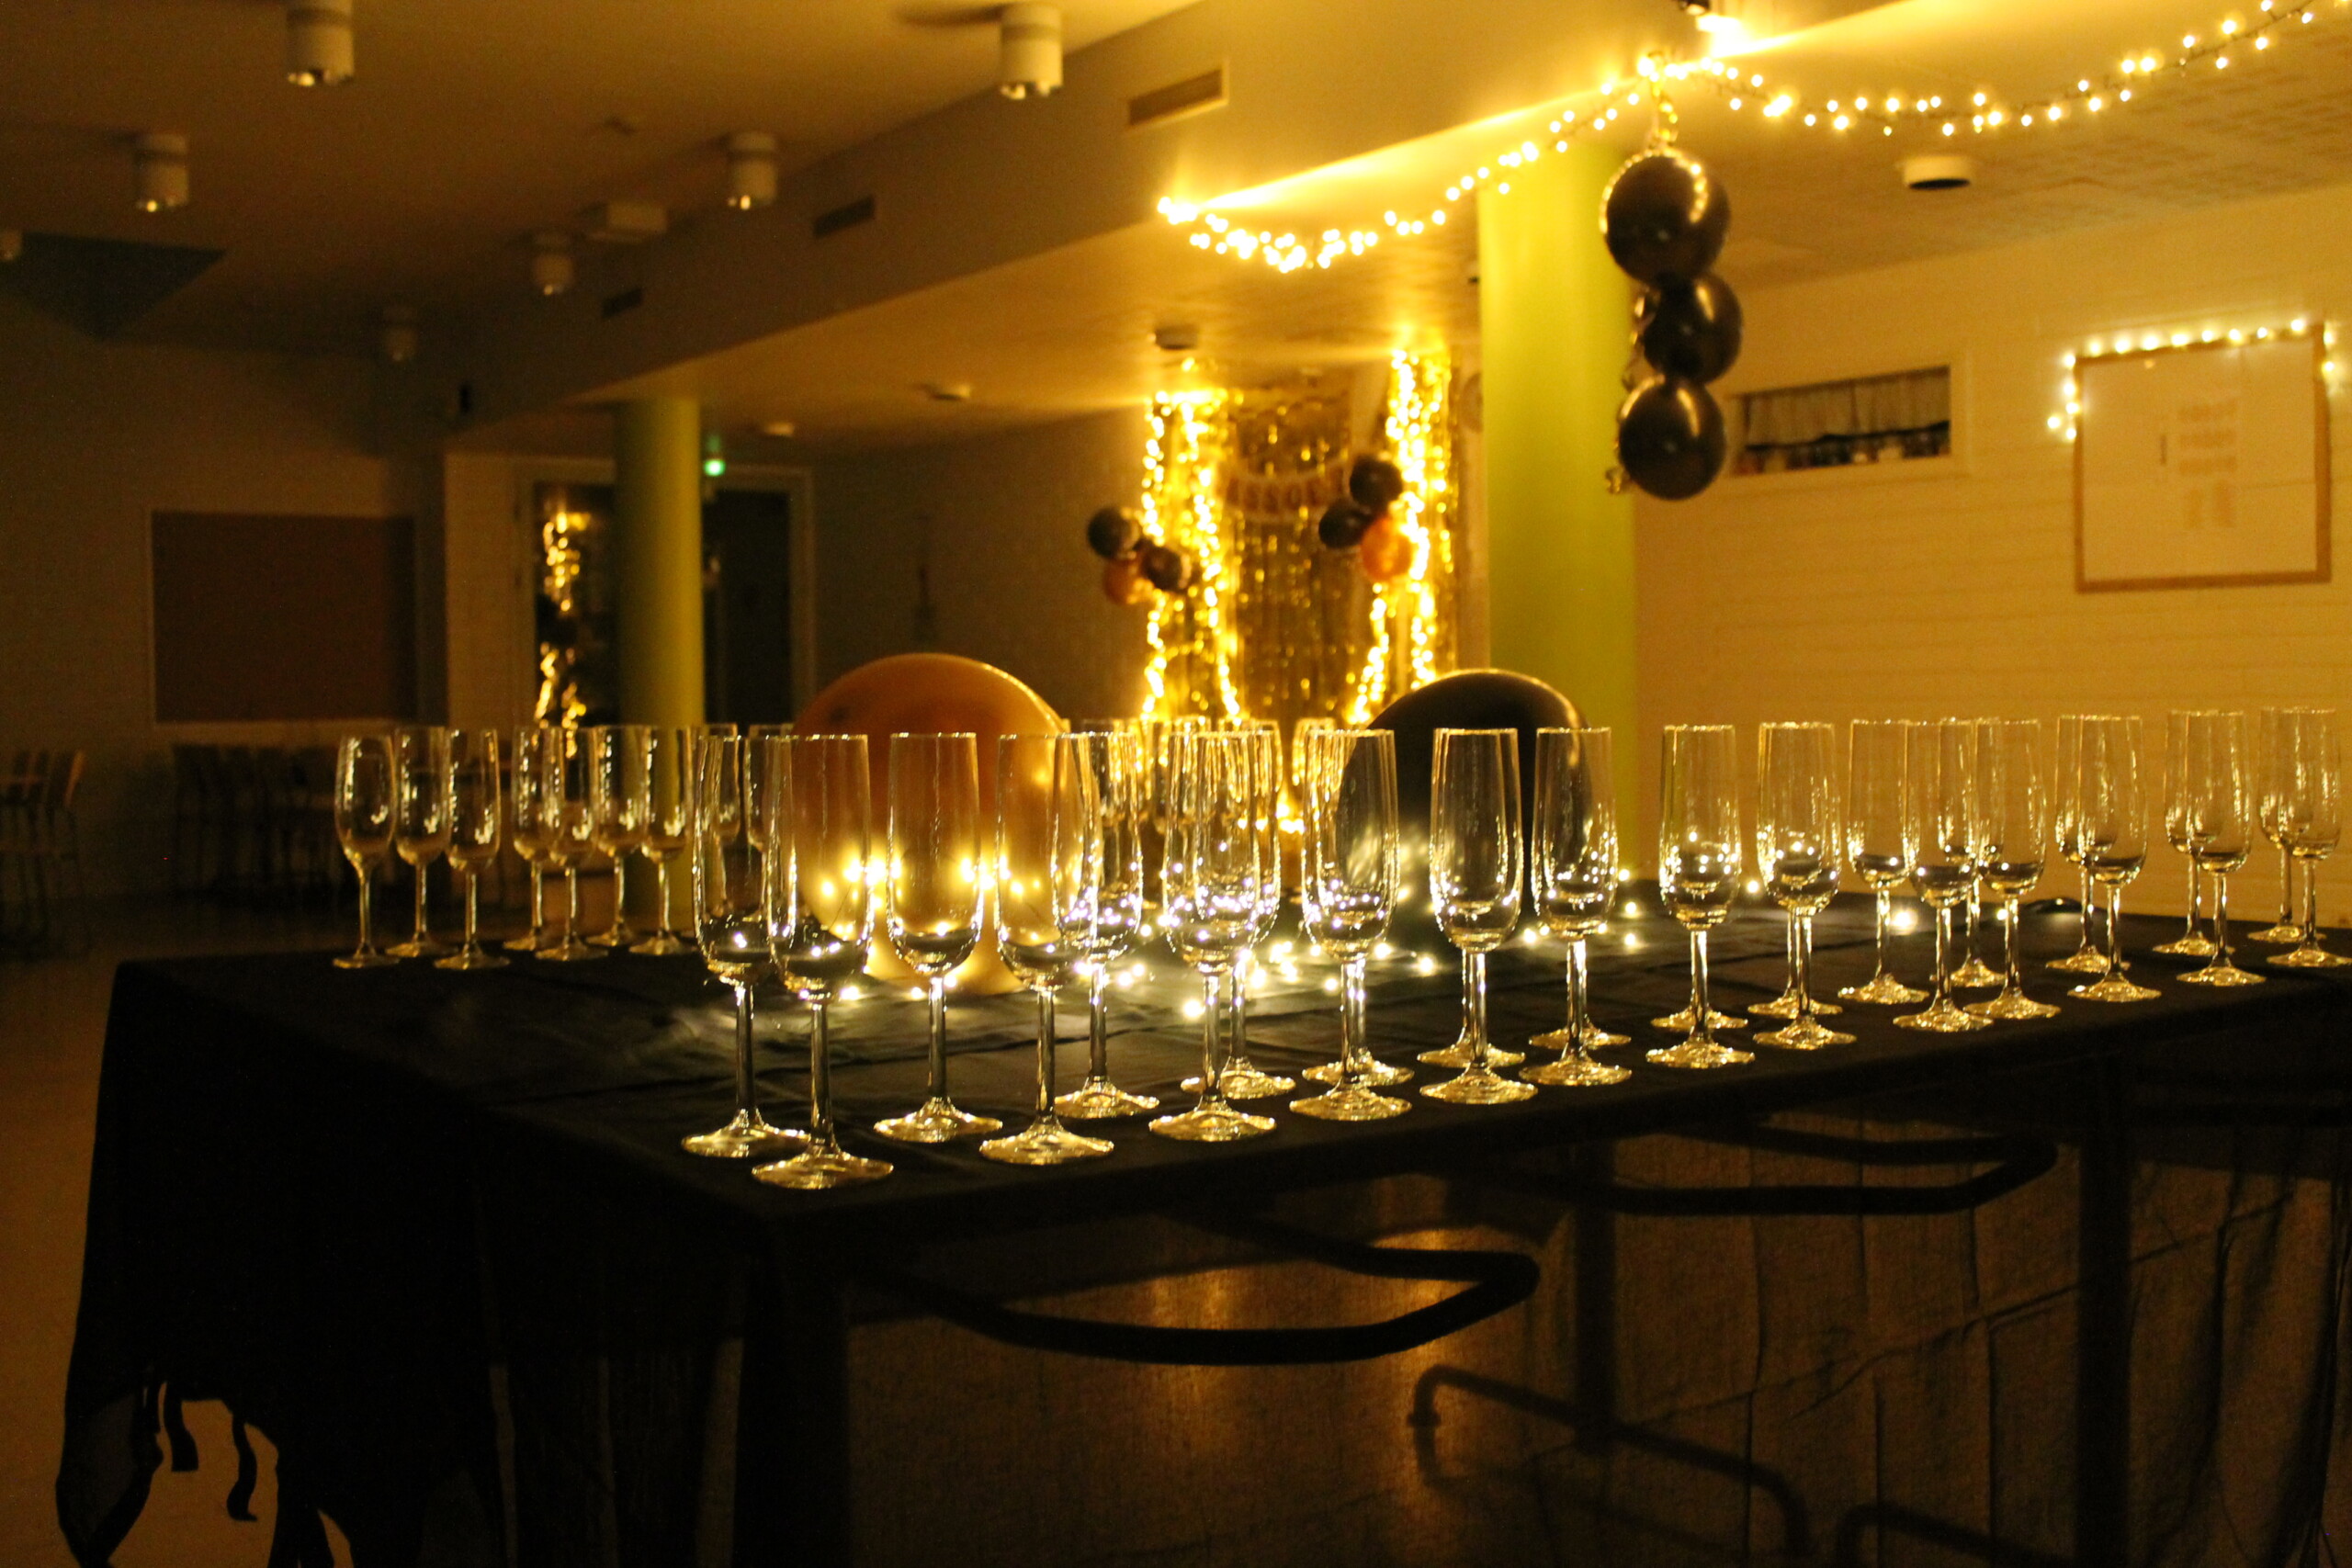 Glas på bord i festsal på kvällen.